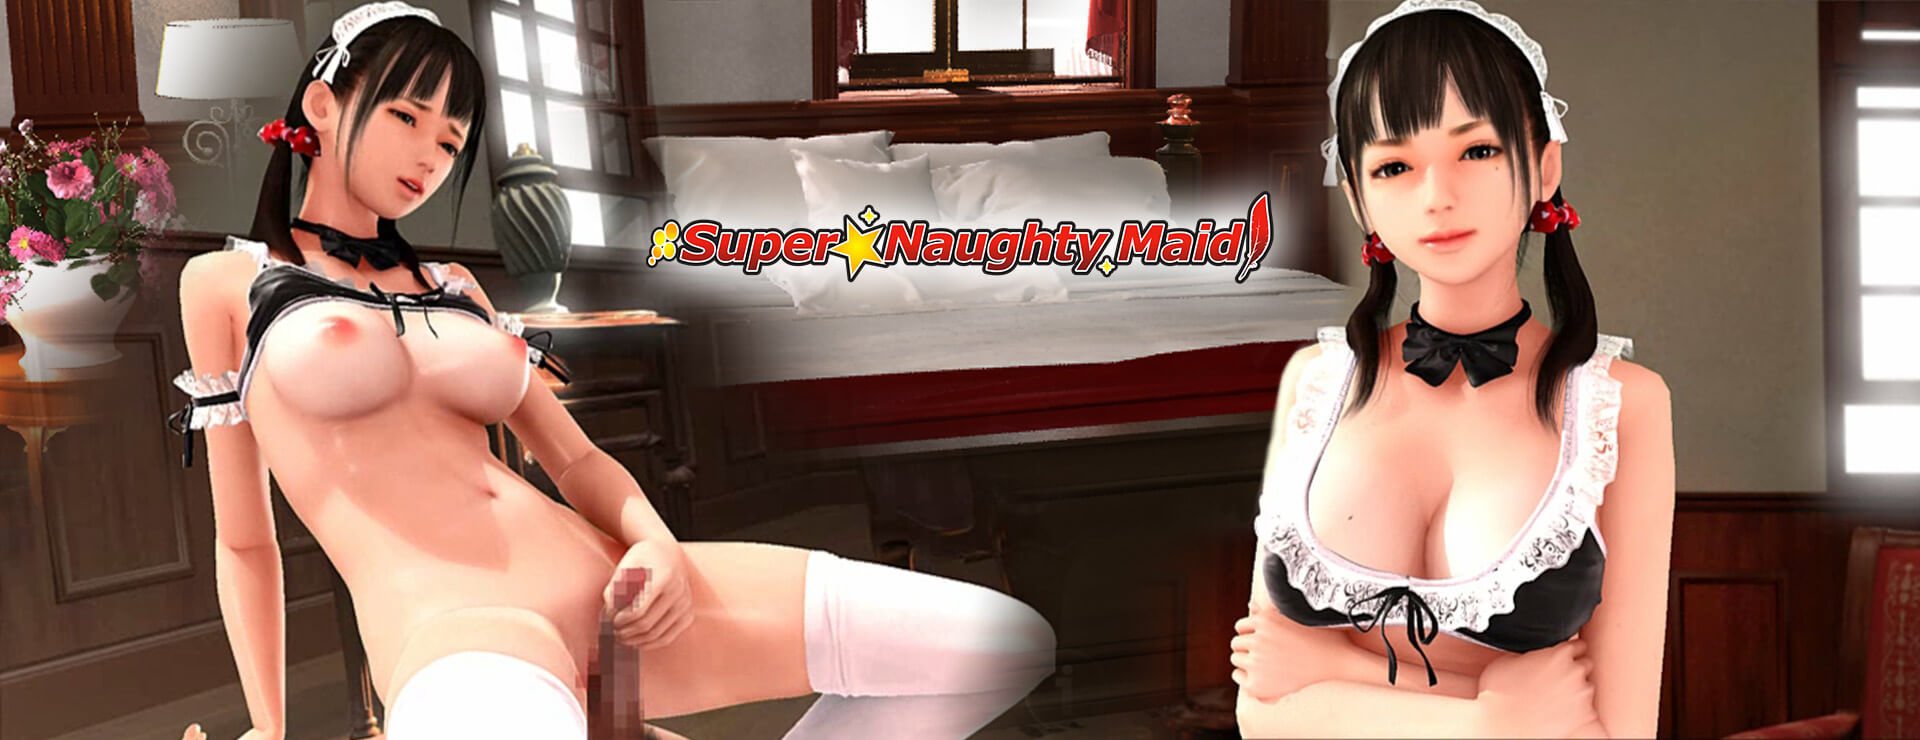 Super Naughty Maid 1 - Simulation Jeu